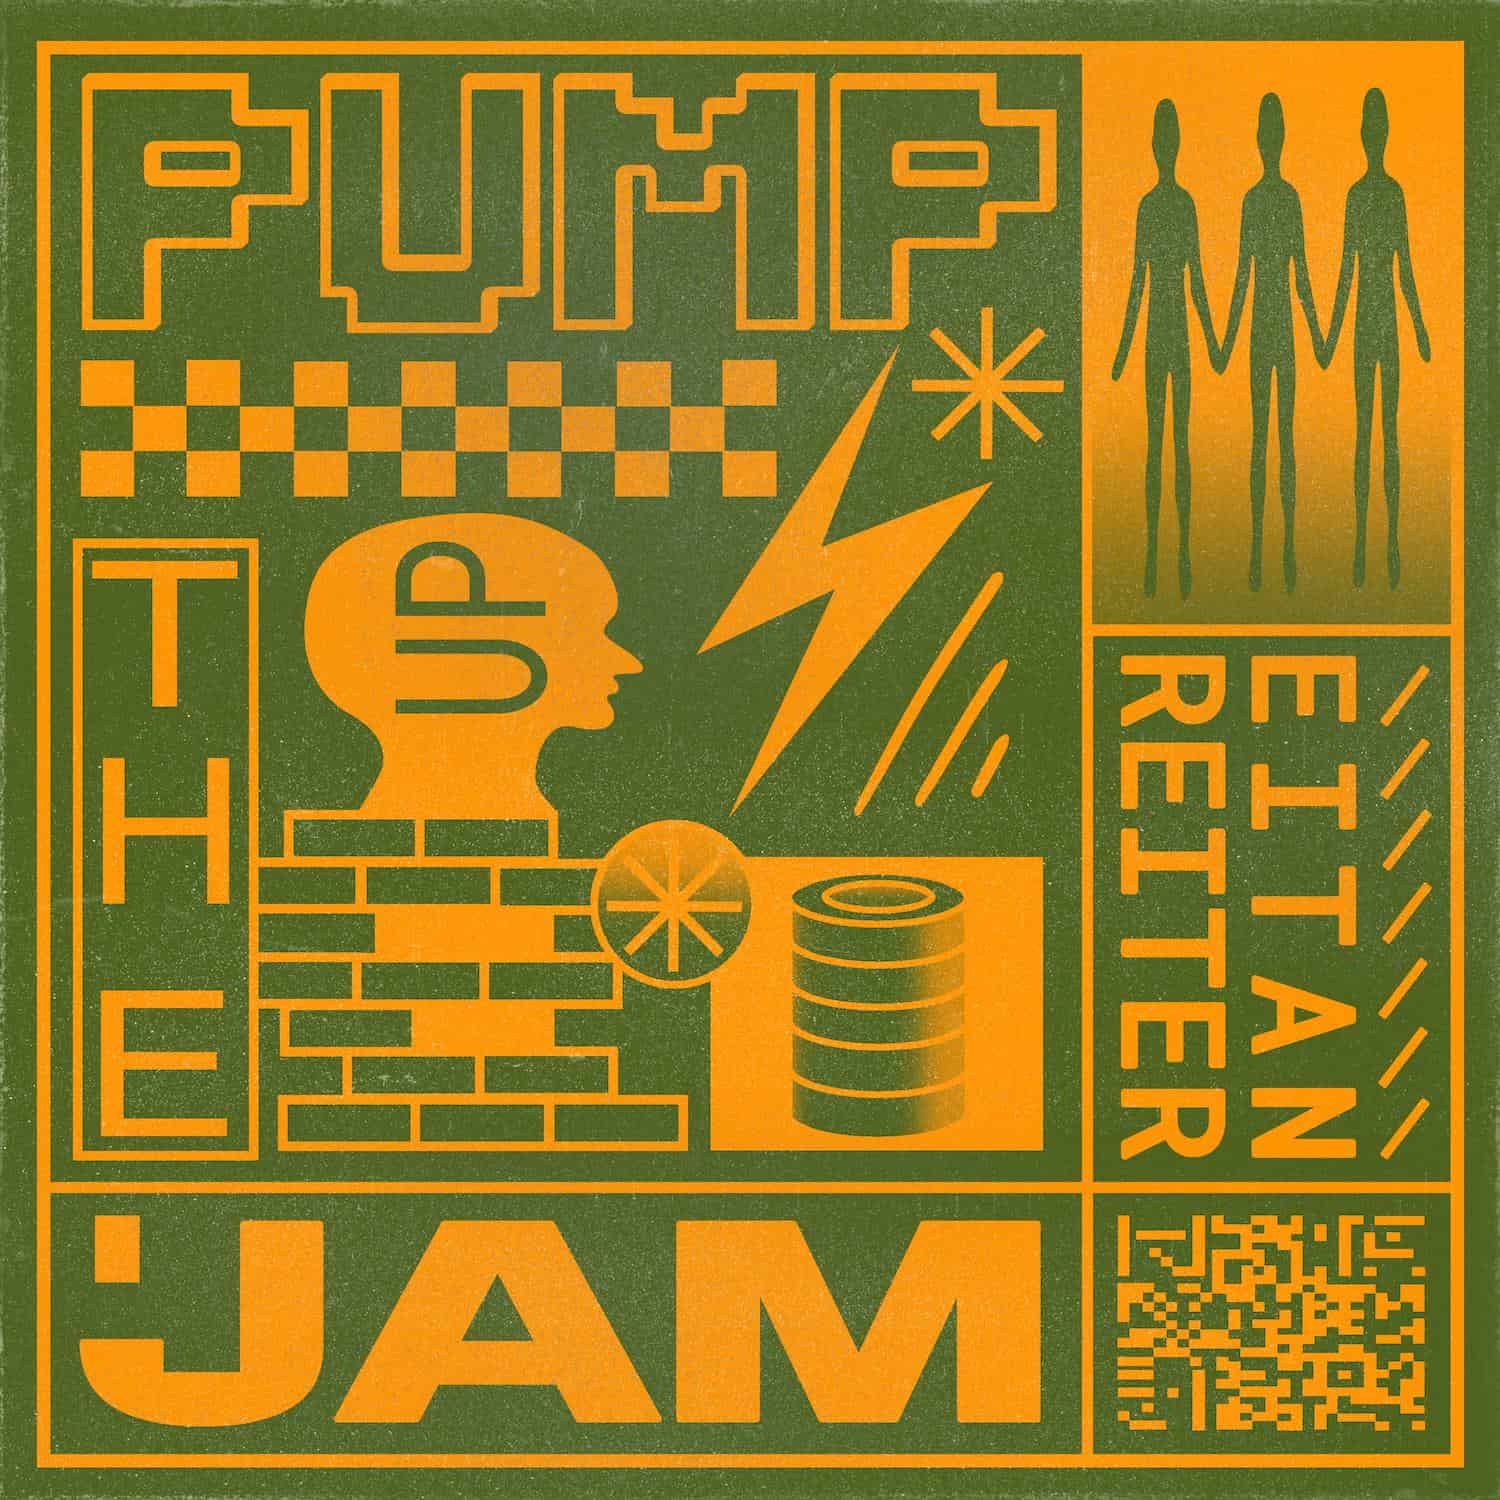 Download Eitan Reiter - Pump Up The Jam on Electrobuzz